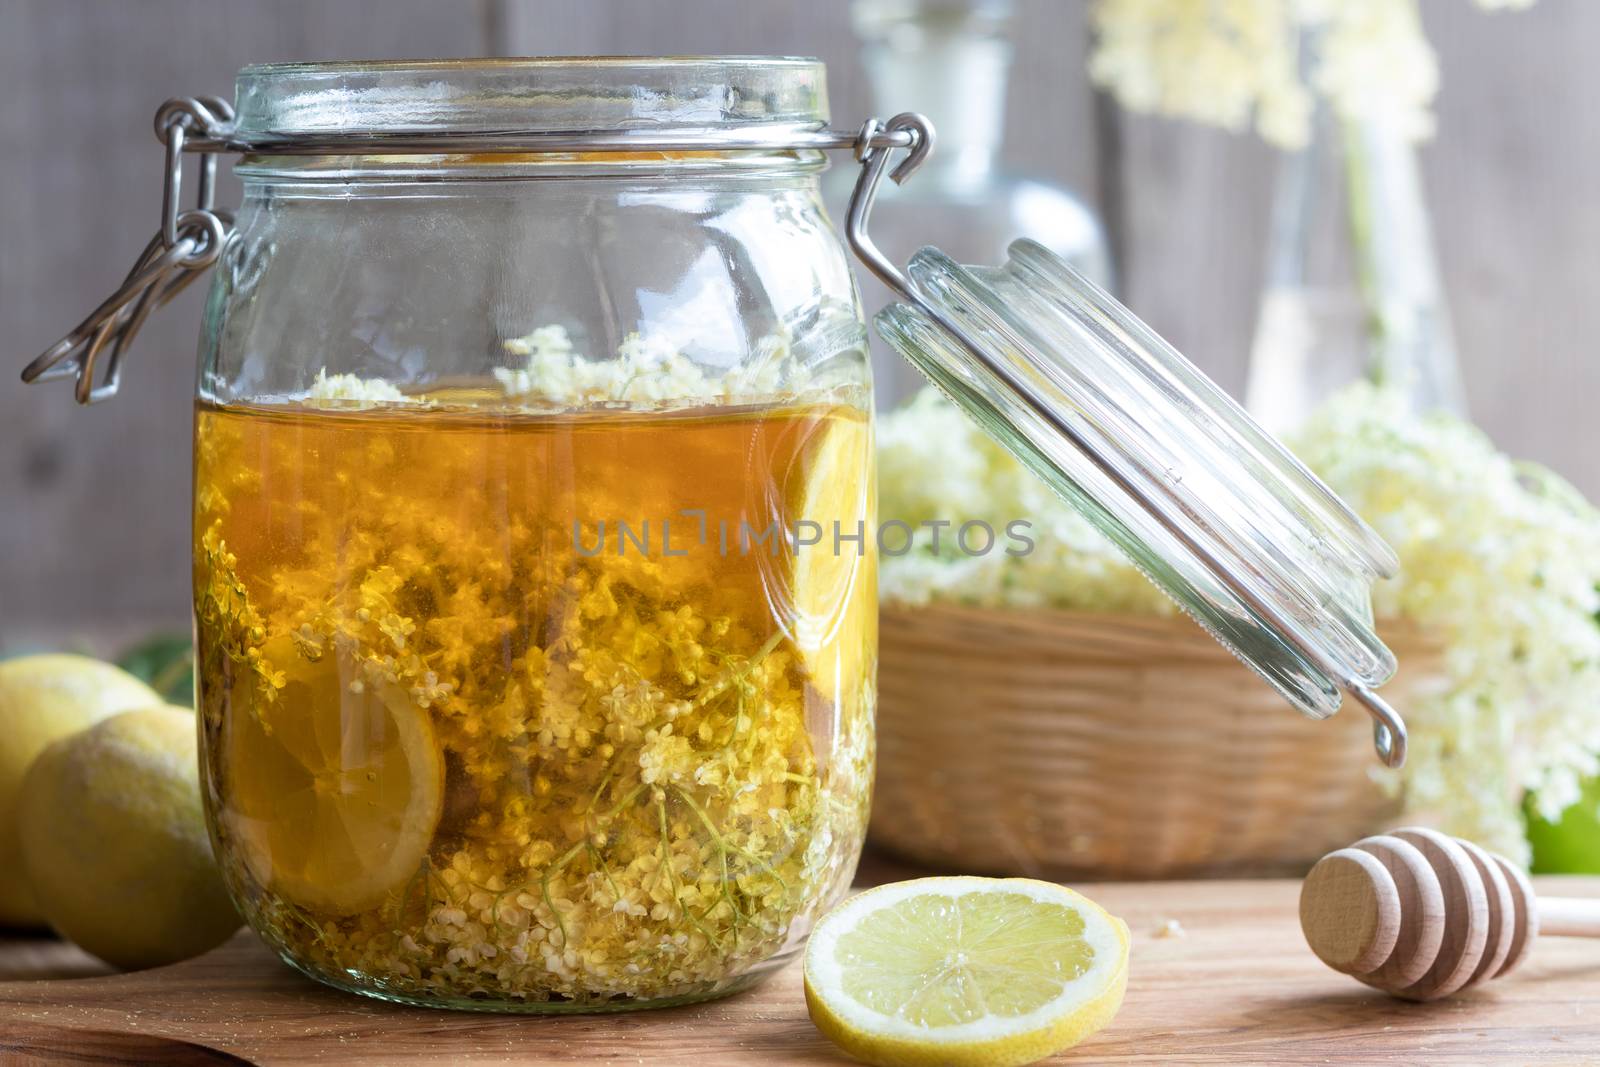 Preparation of a natural elder flower syrup from fresh elder flowers, honey, and lemon